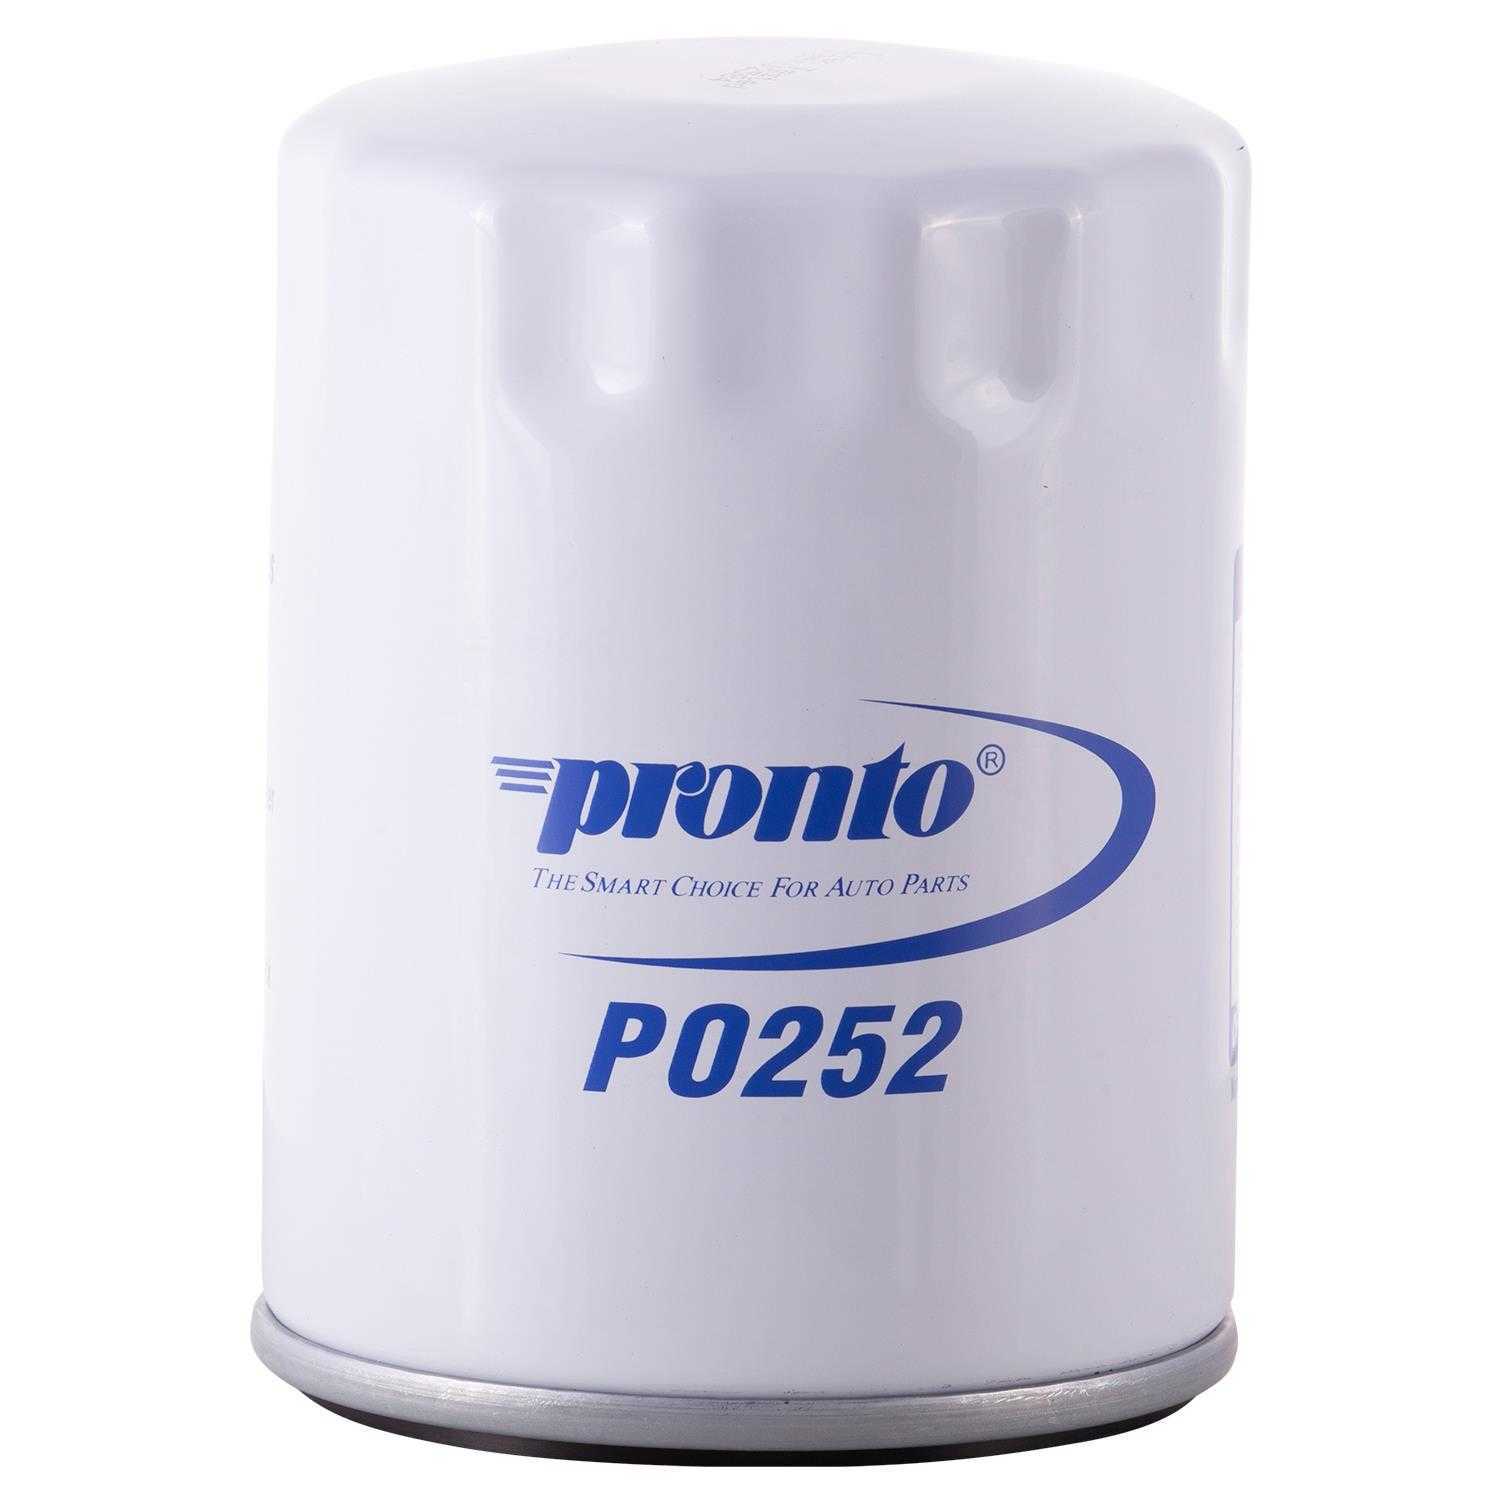 PRONTO/ID USA - Standard Life Oil Filter - PNP PO252